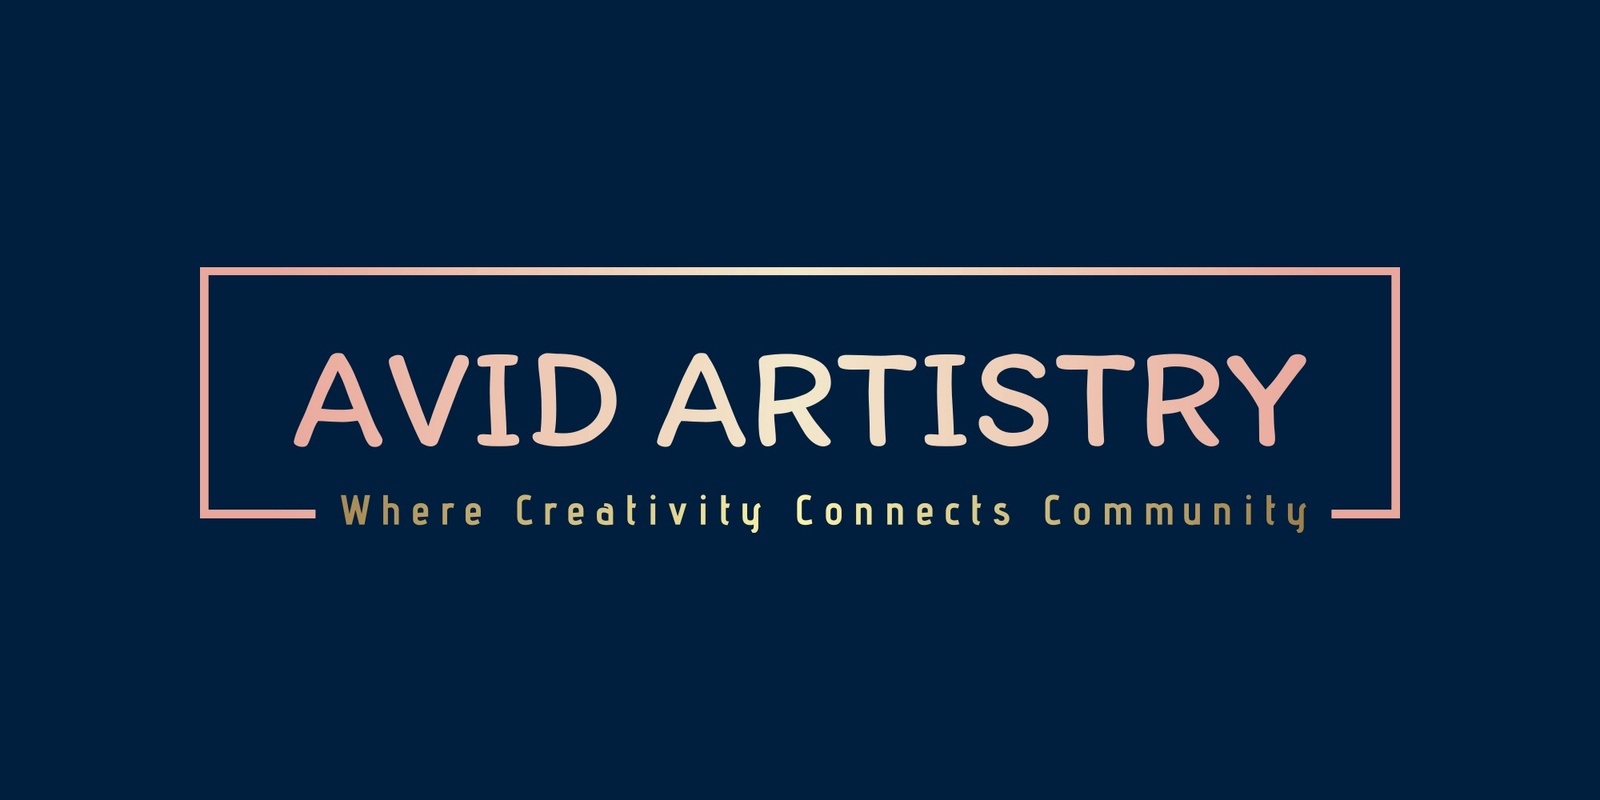 Avid Artistry's banner